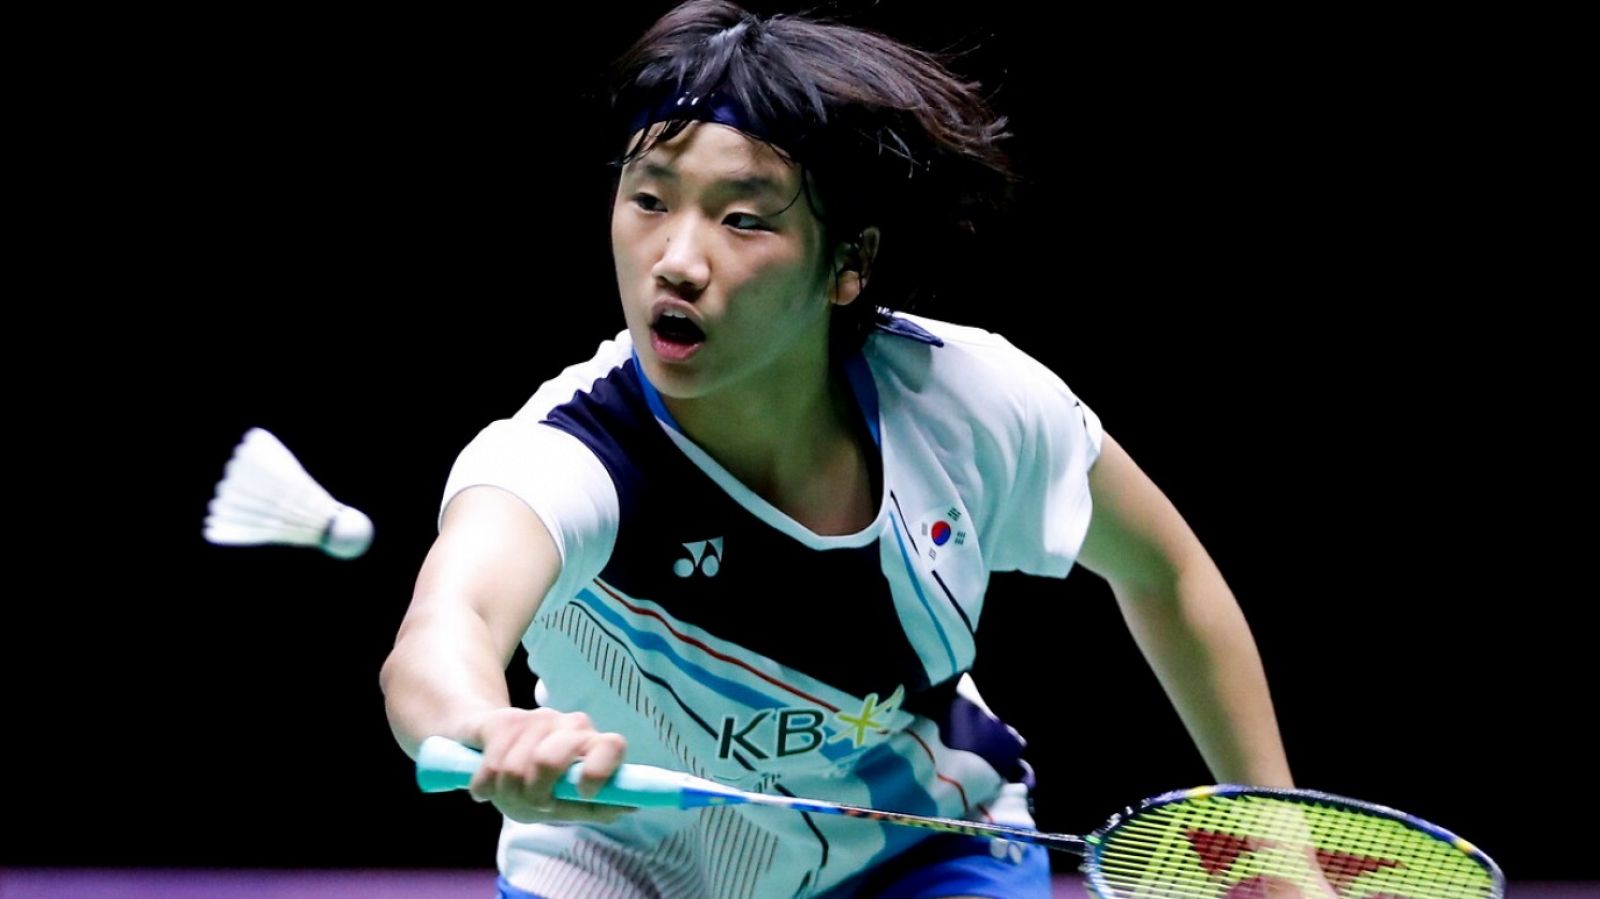 Bádminton - Thailandia Masters Final individual femenina: A.Yamaguchi - An S.Y. - RTVE.es